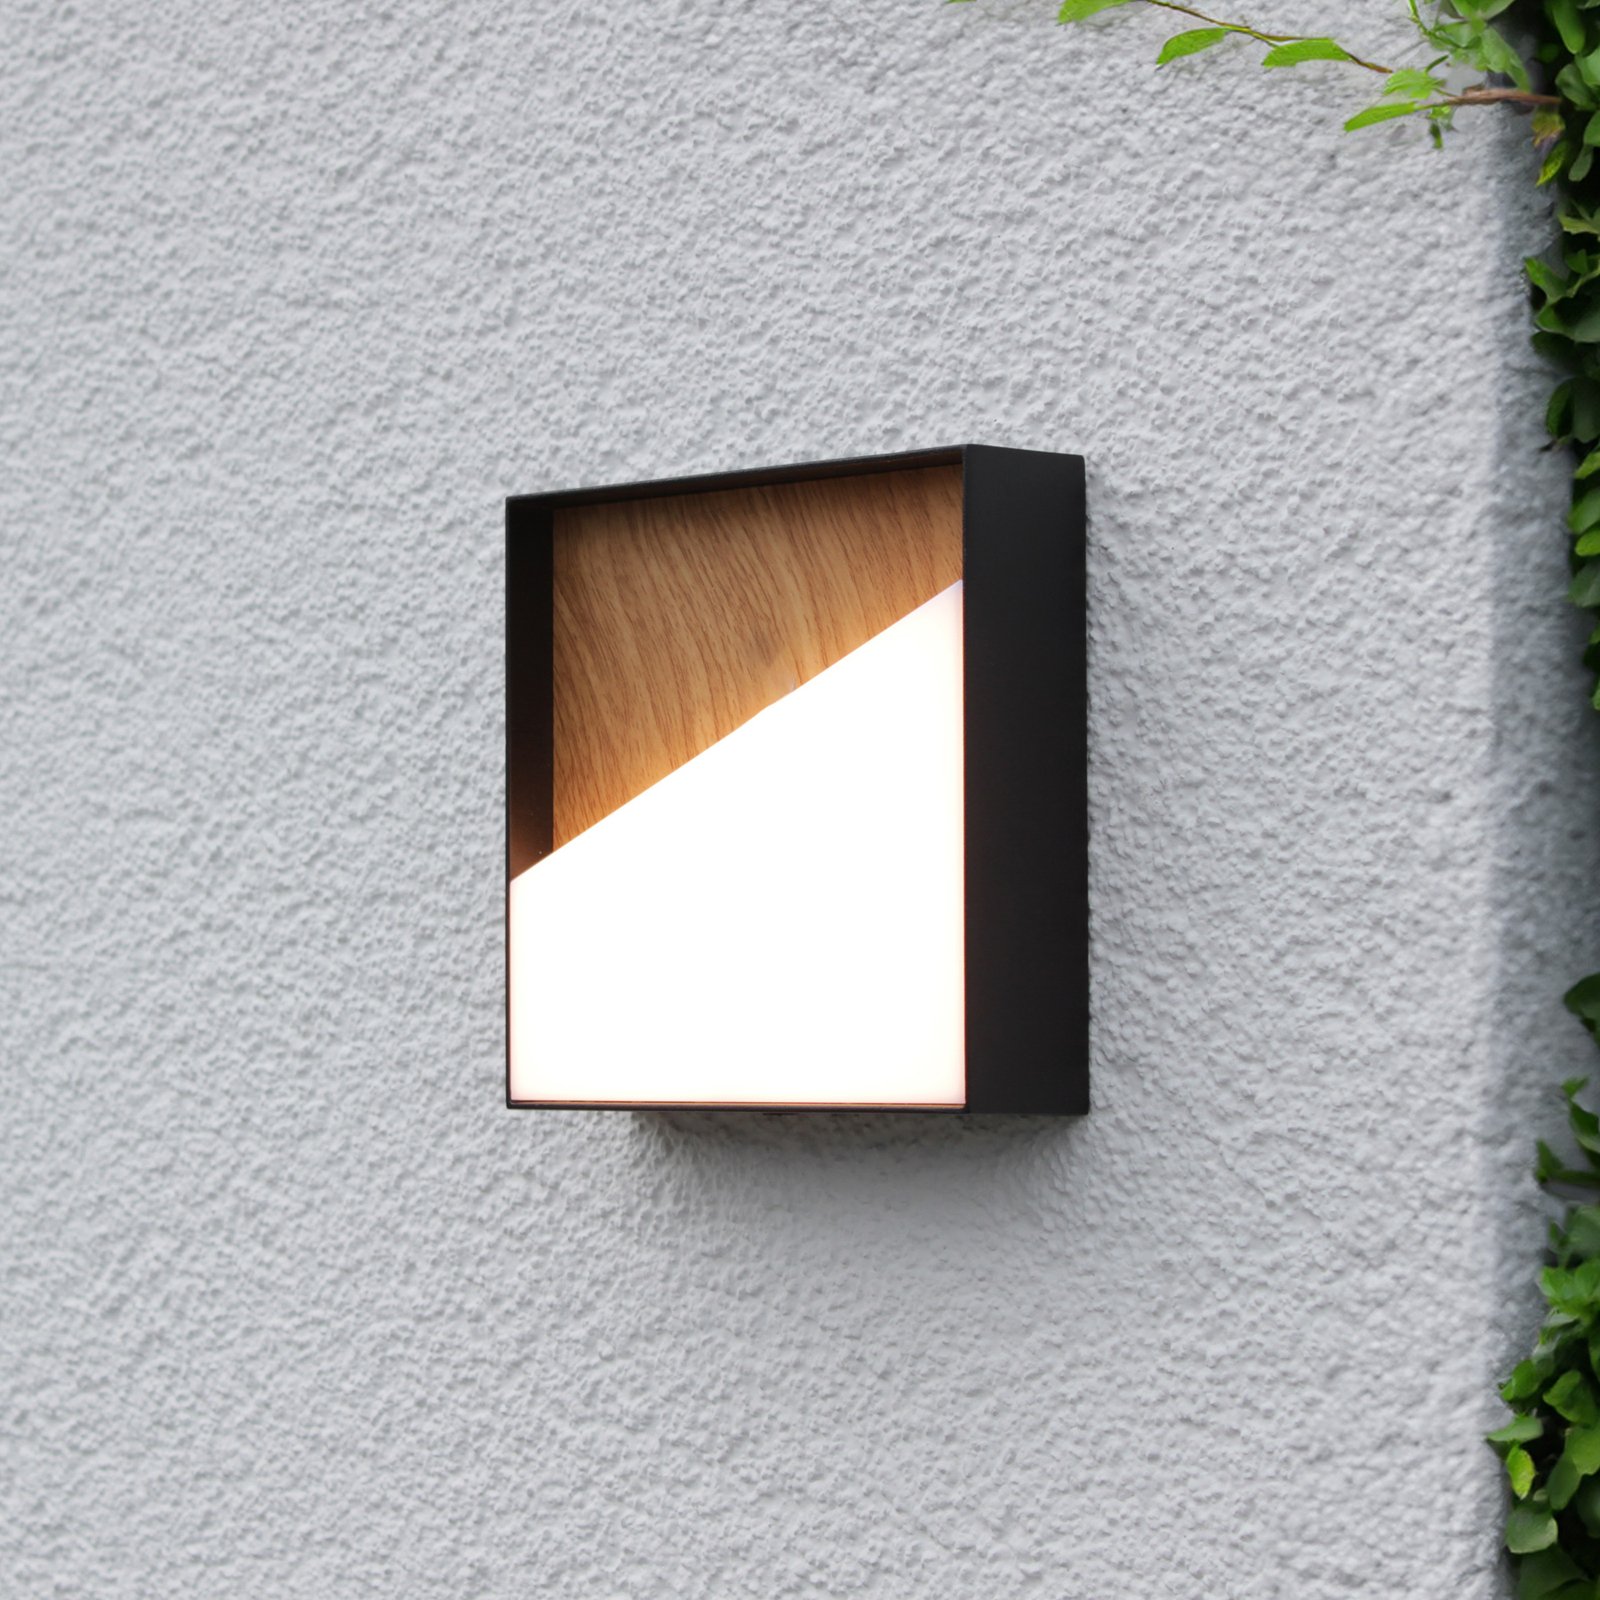 LED outdoor wall light Meg, wood-coloured, 15 x 15 cm